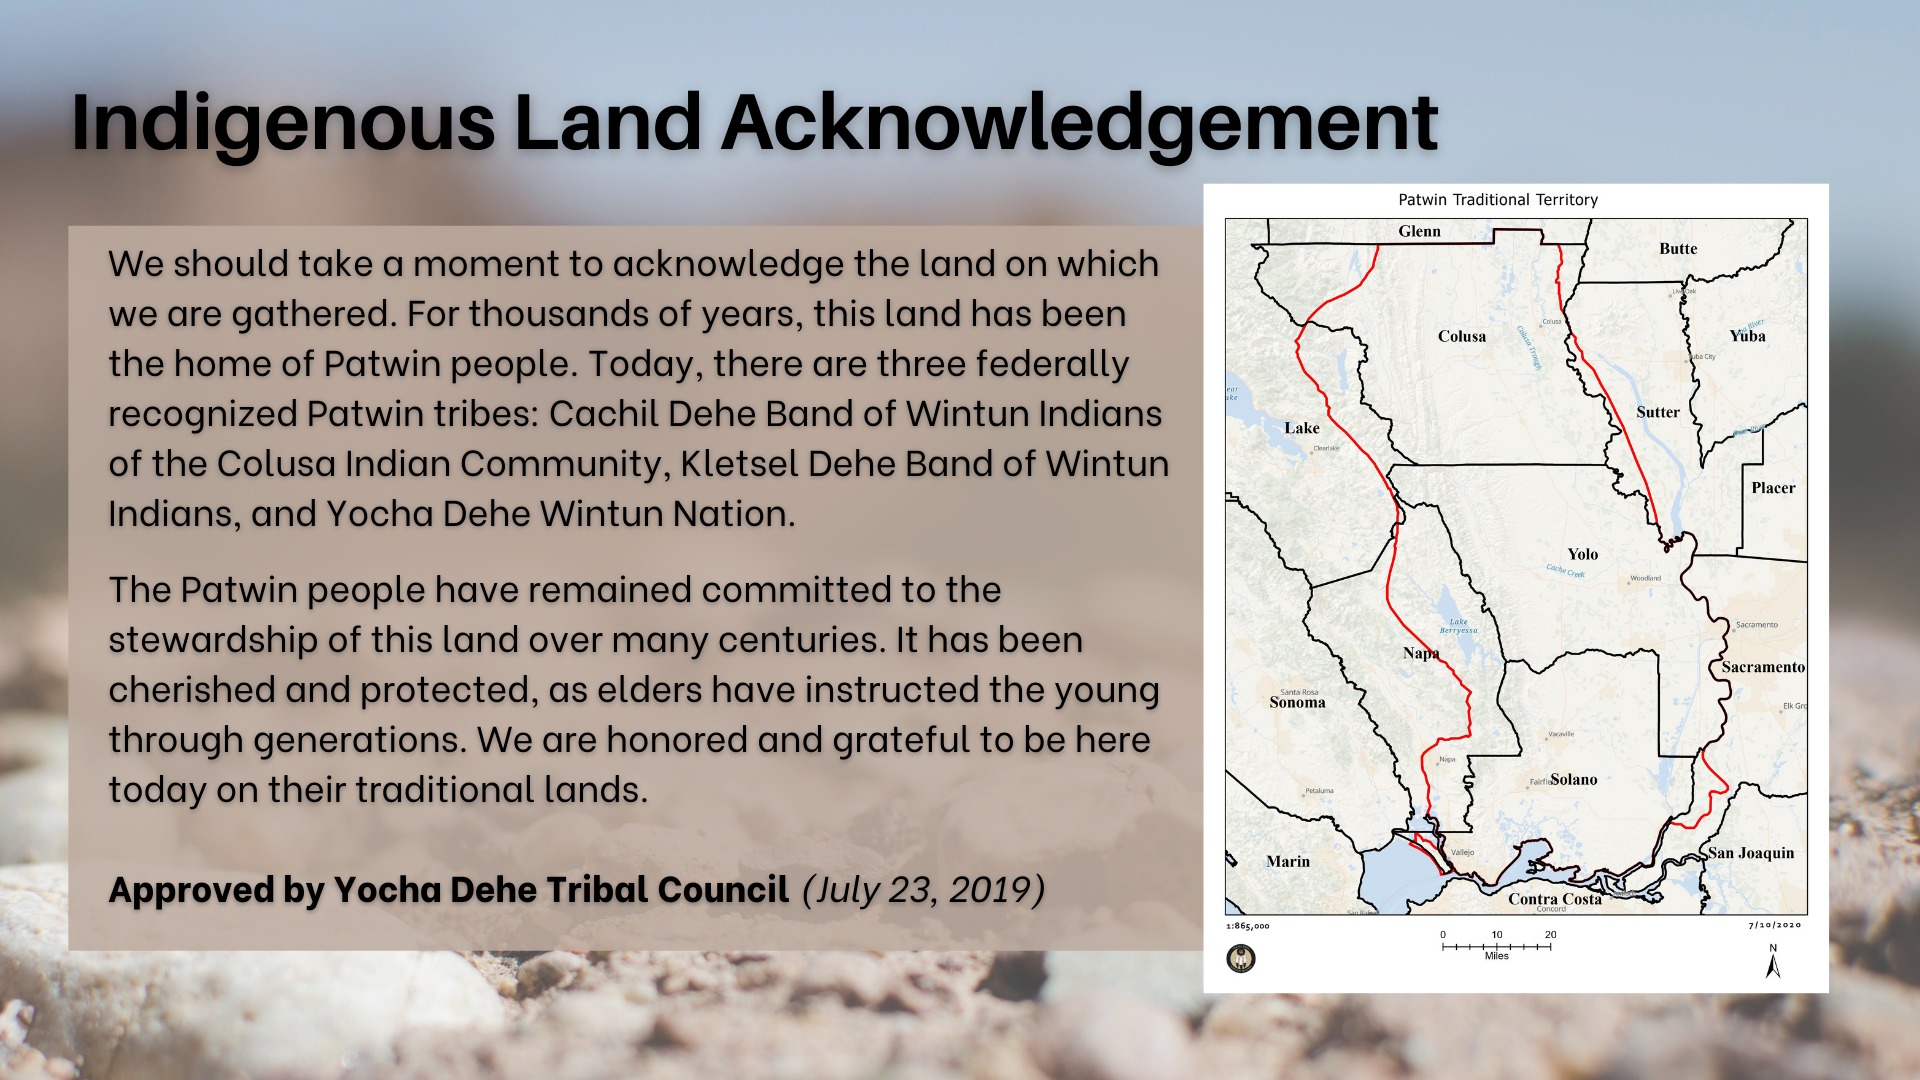 Land Acknowledgment